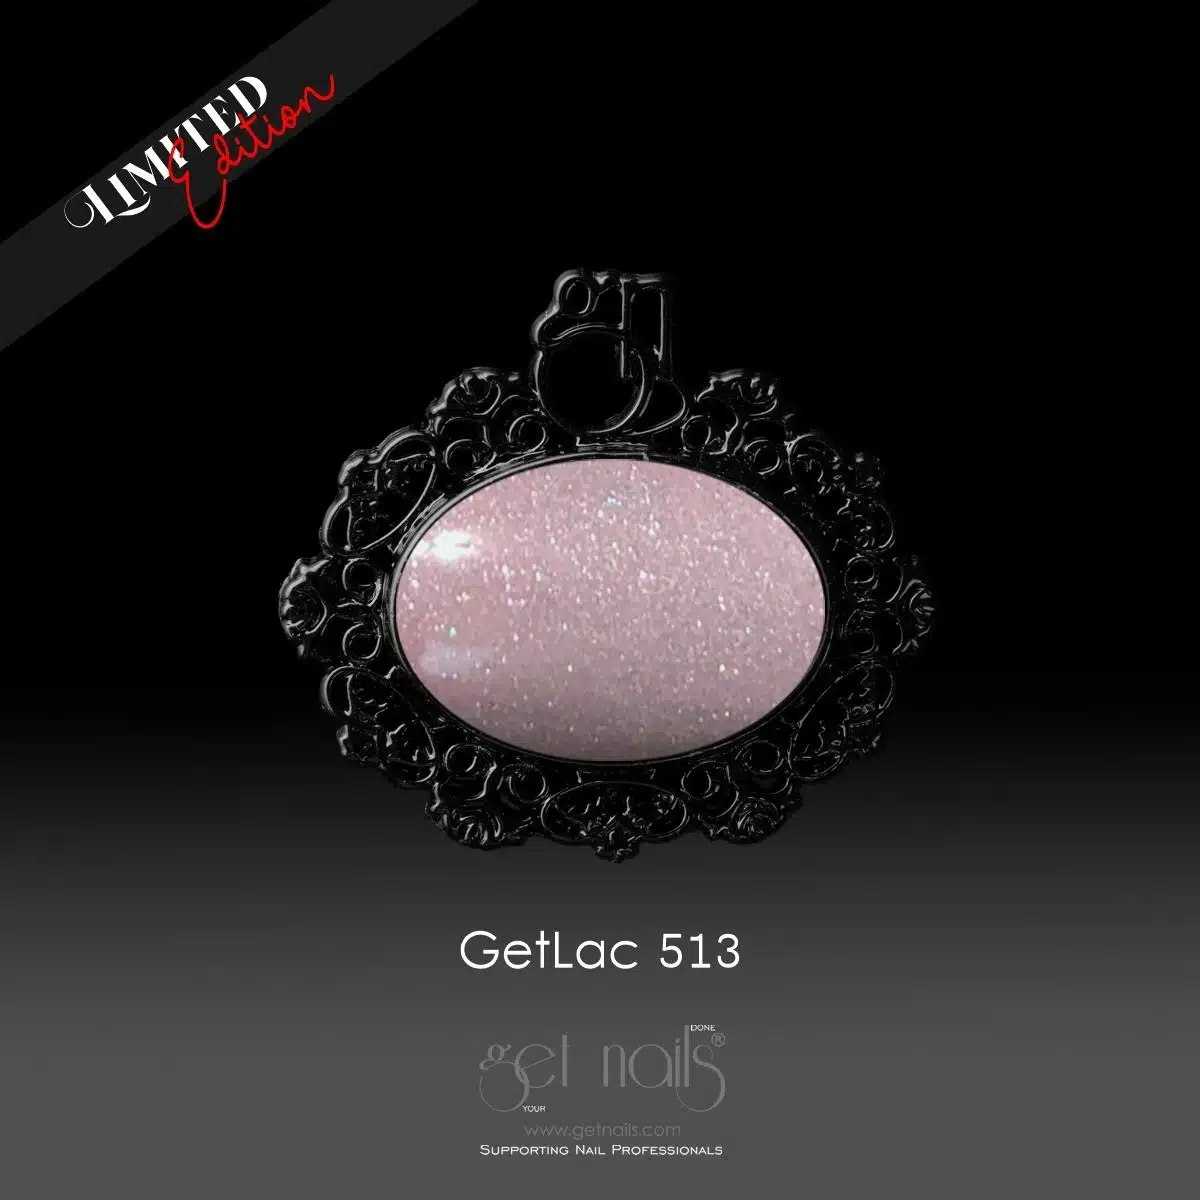 Get Nails Austria - GetLac 513 15г